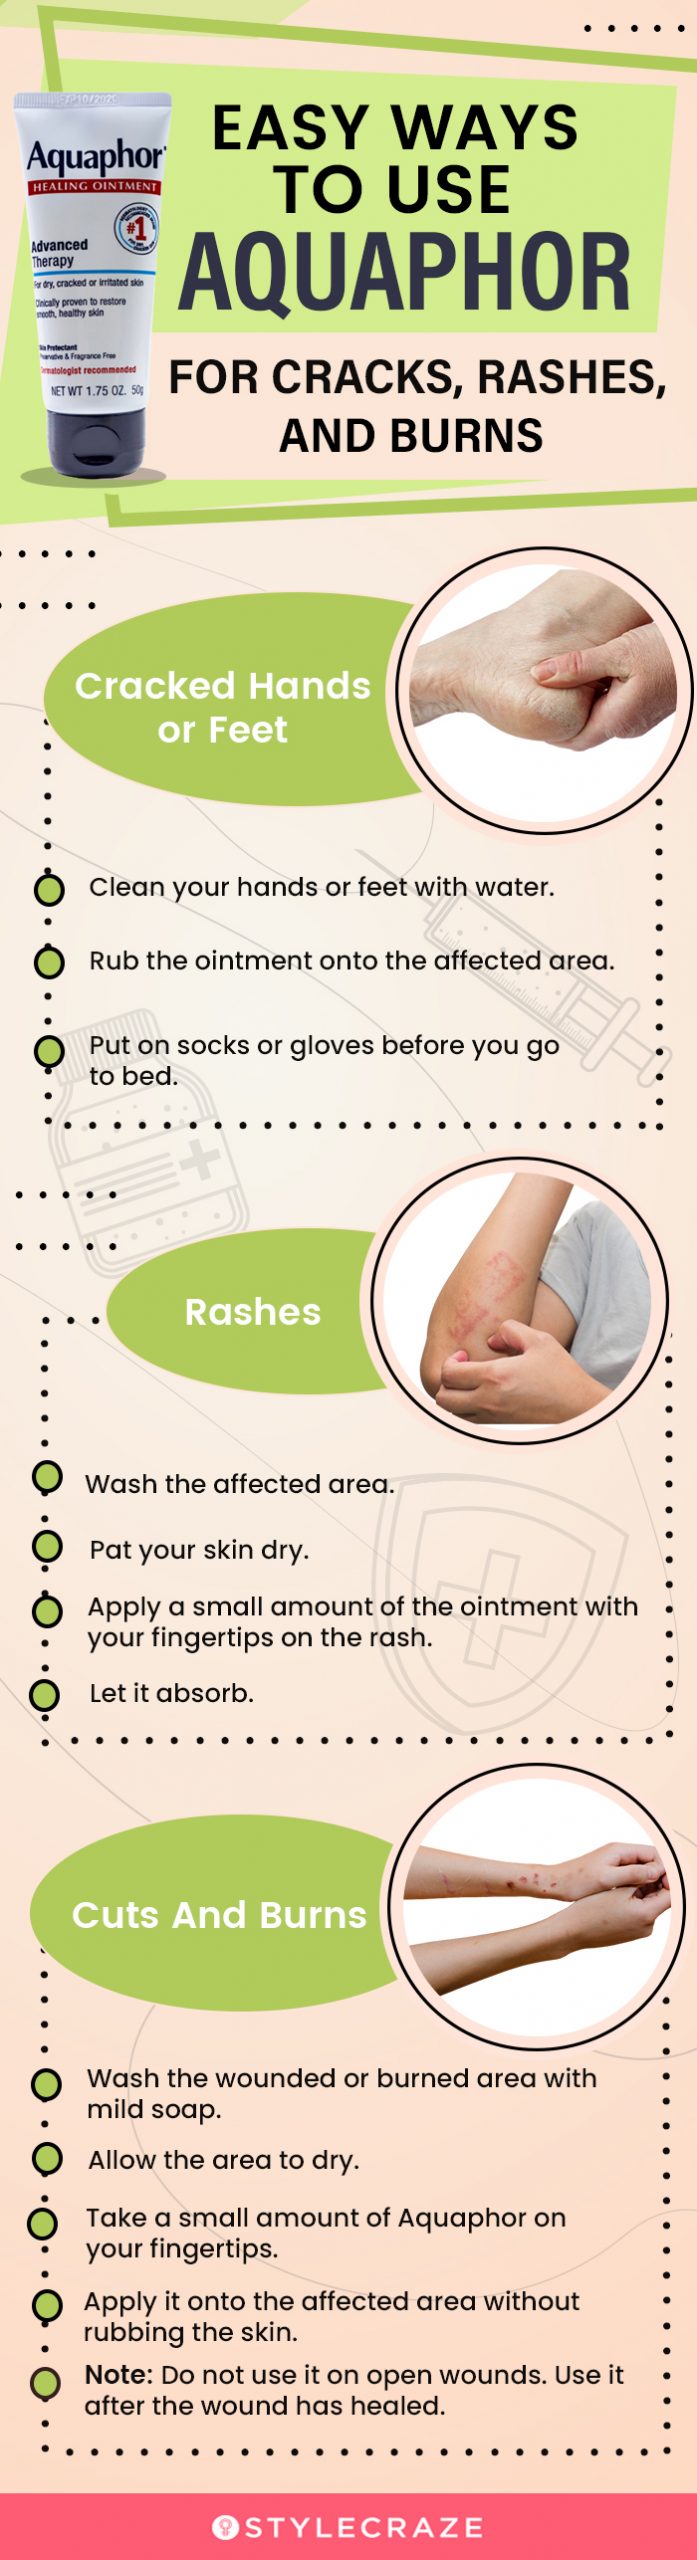 easy ways to use aquaphor for cracks, rashes, and burns [infographic]